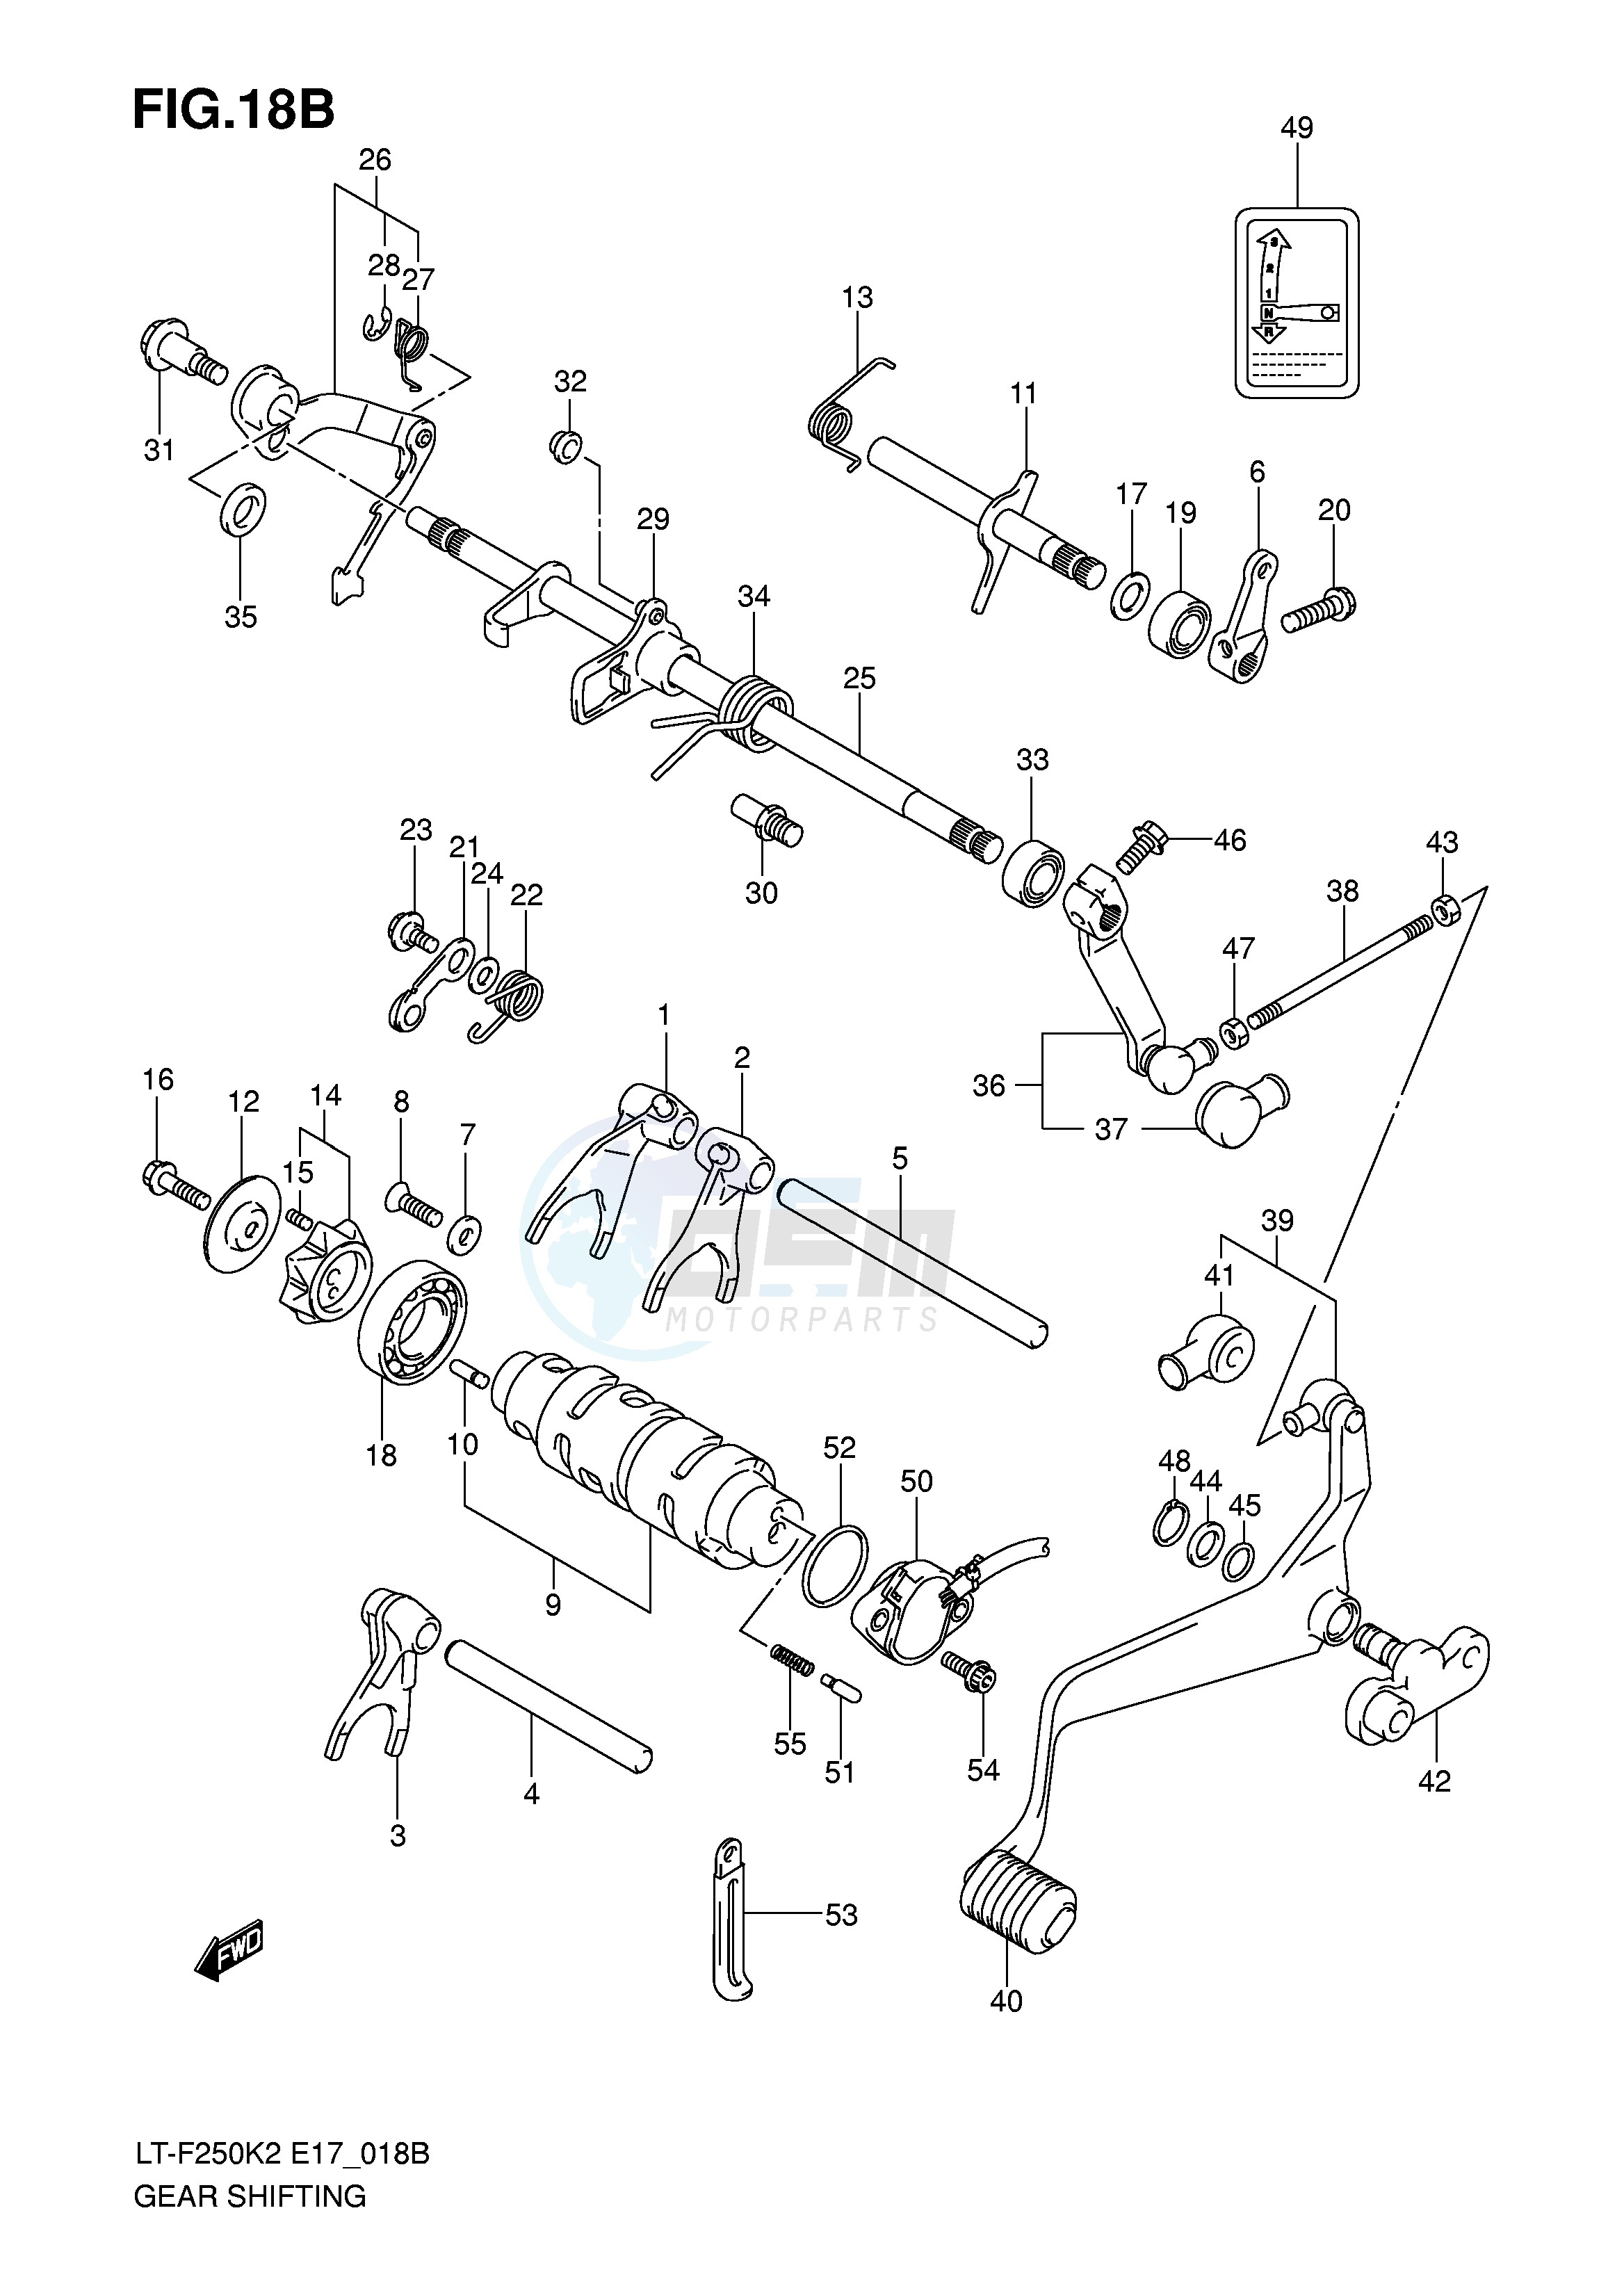 GEAR SHIFTING (LT-F250K6 E4) blueprint